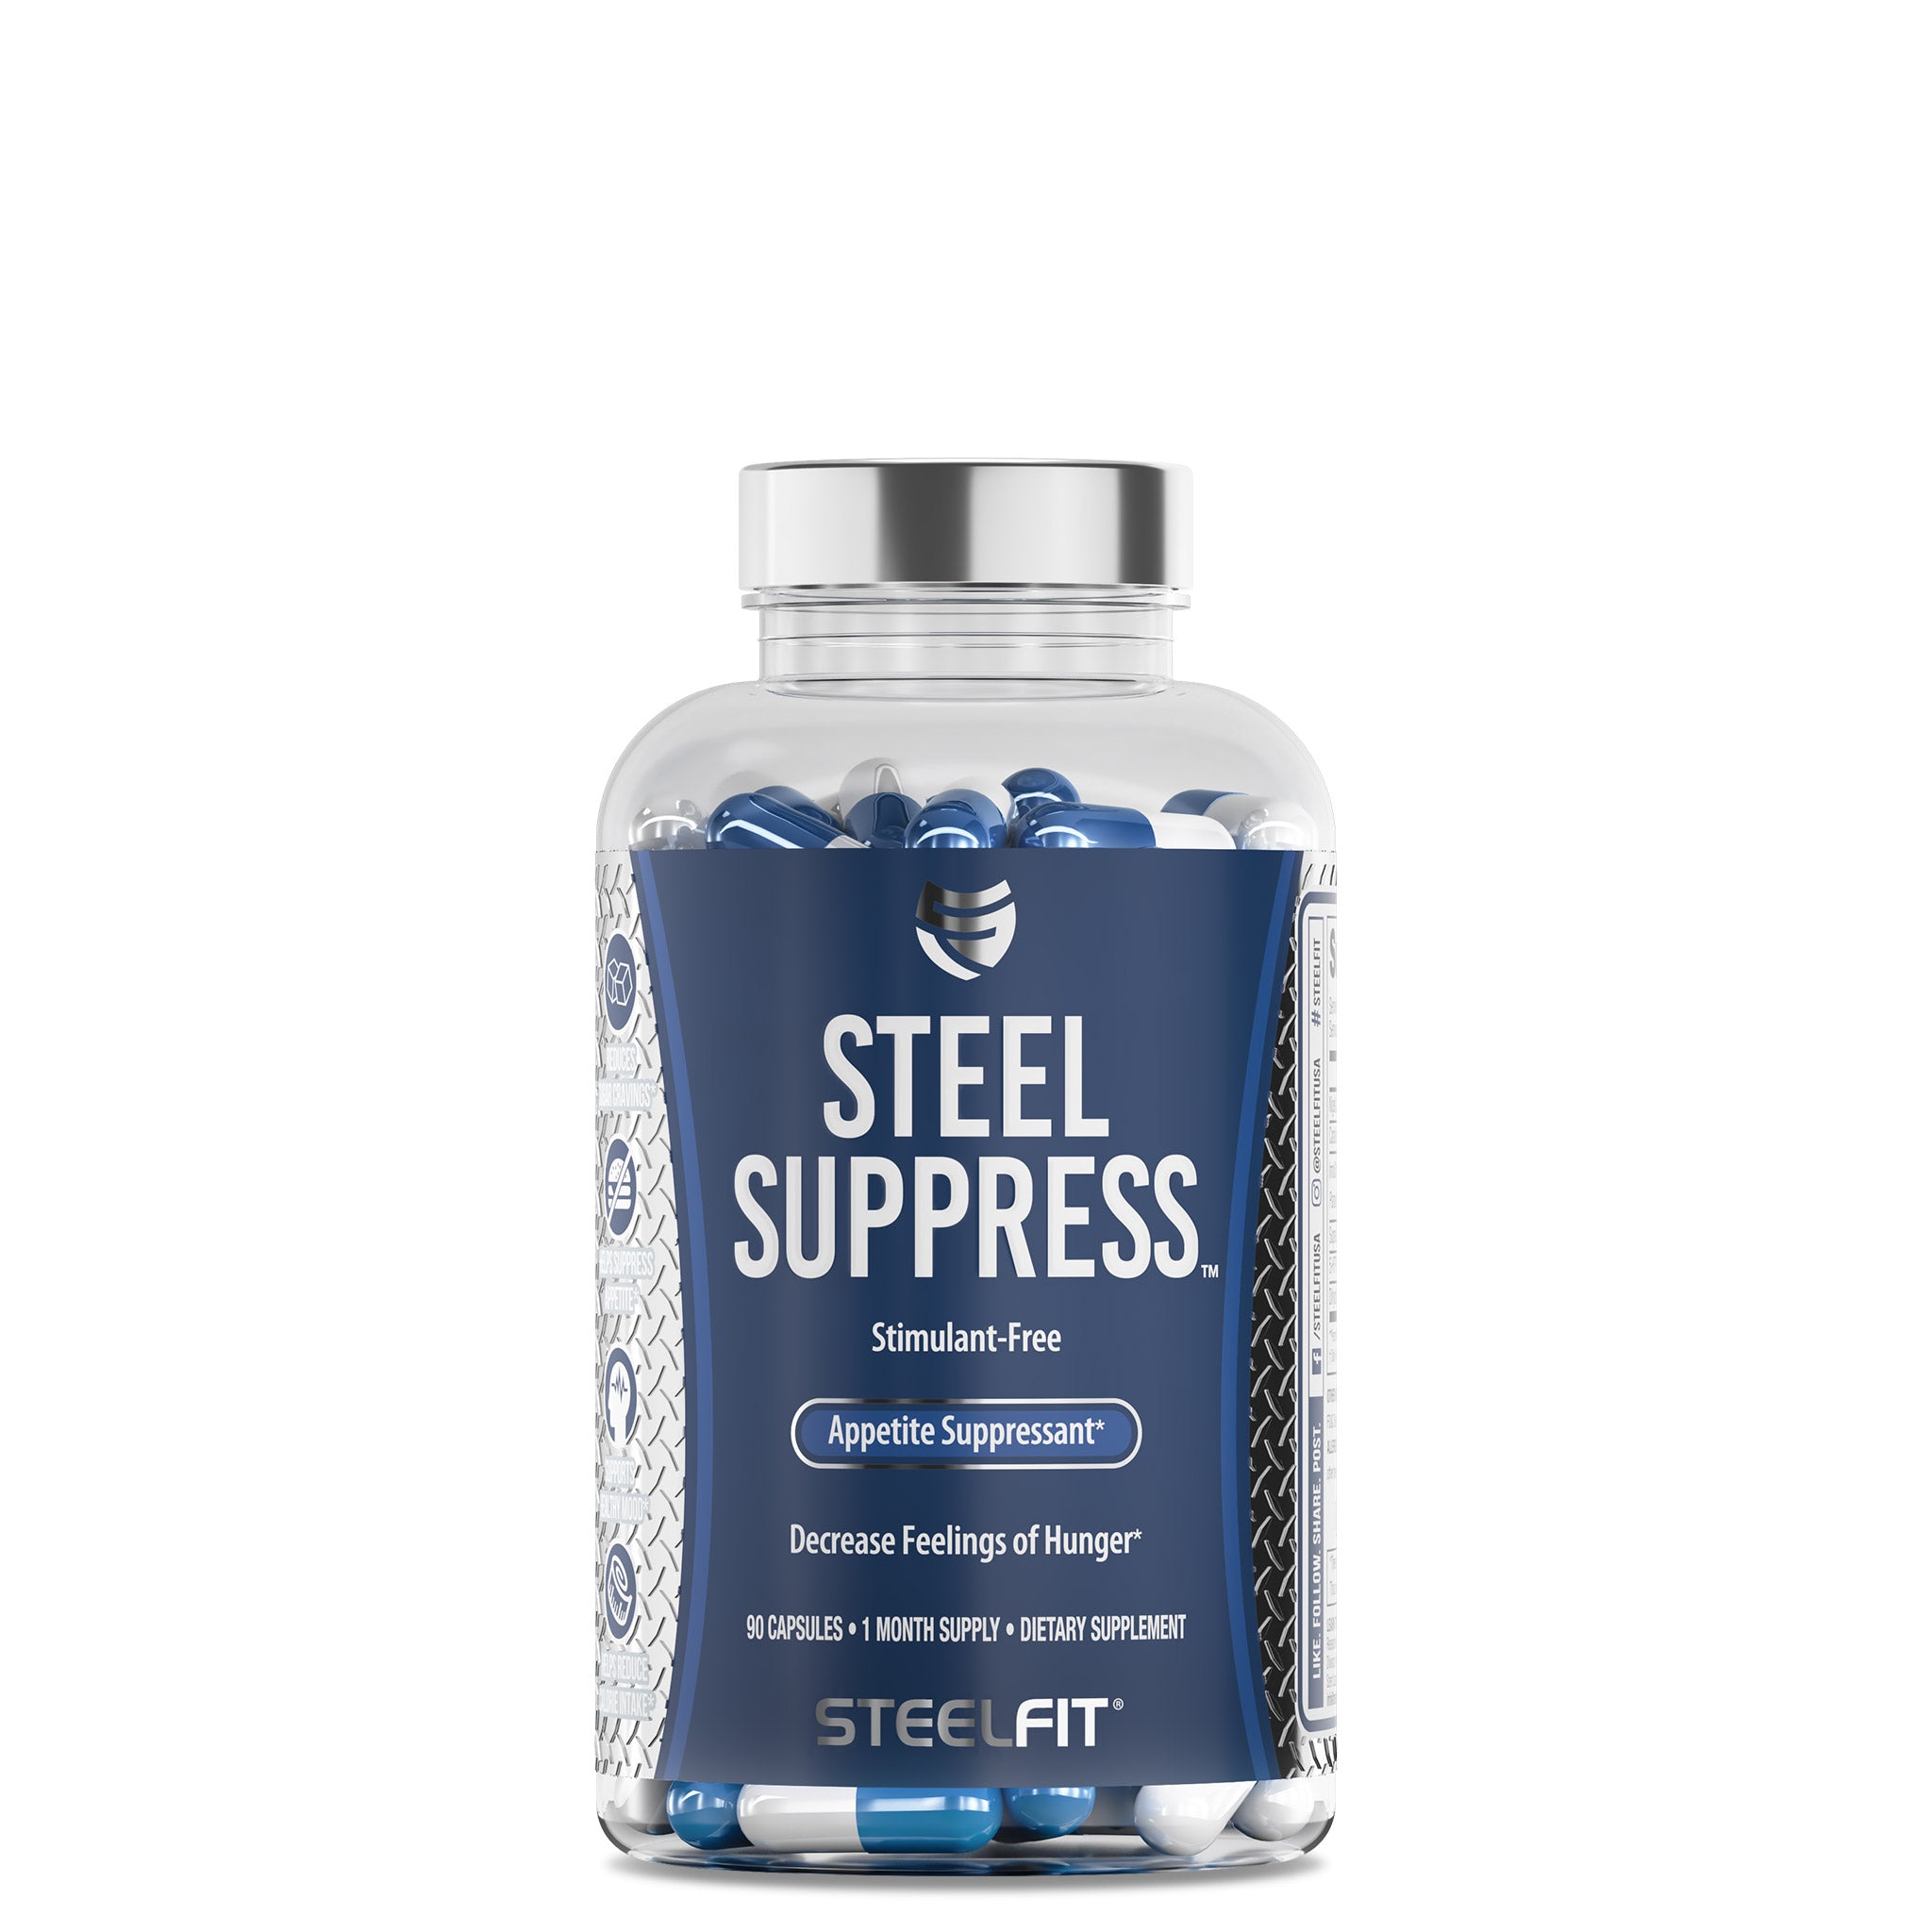 Steel Suppress Stimulant-Free Appetite Suppressant by SteelFit